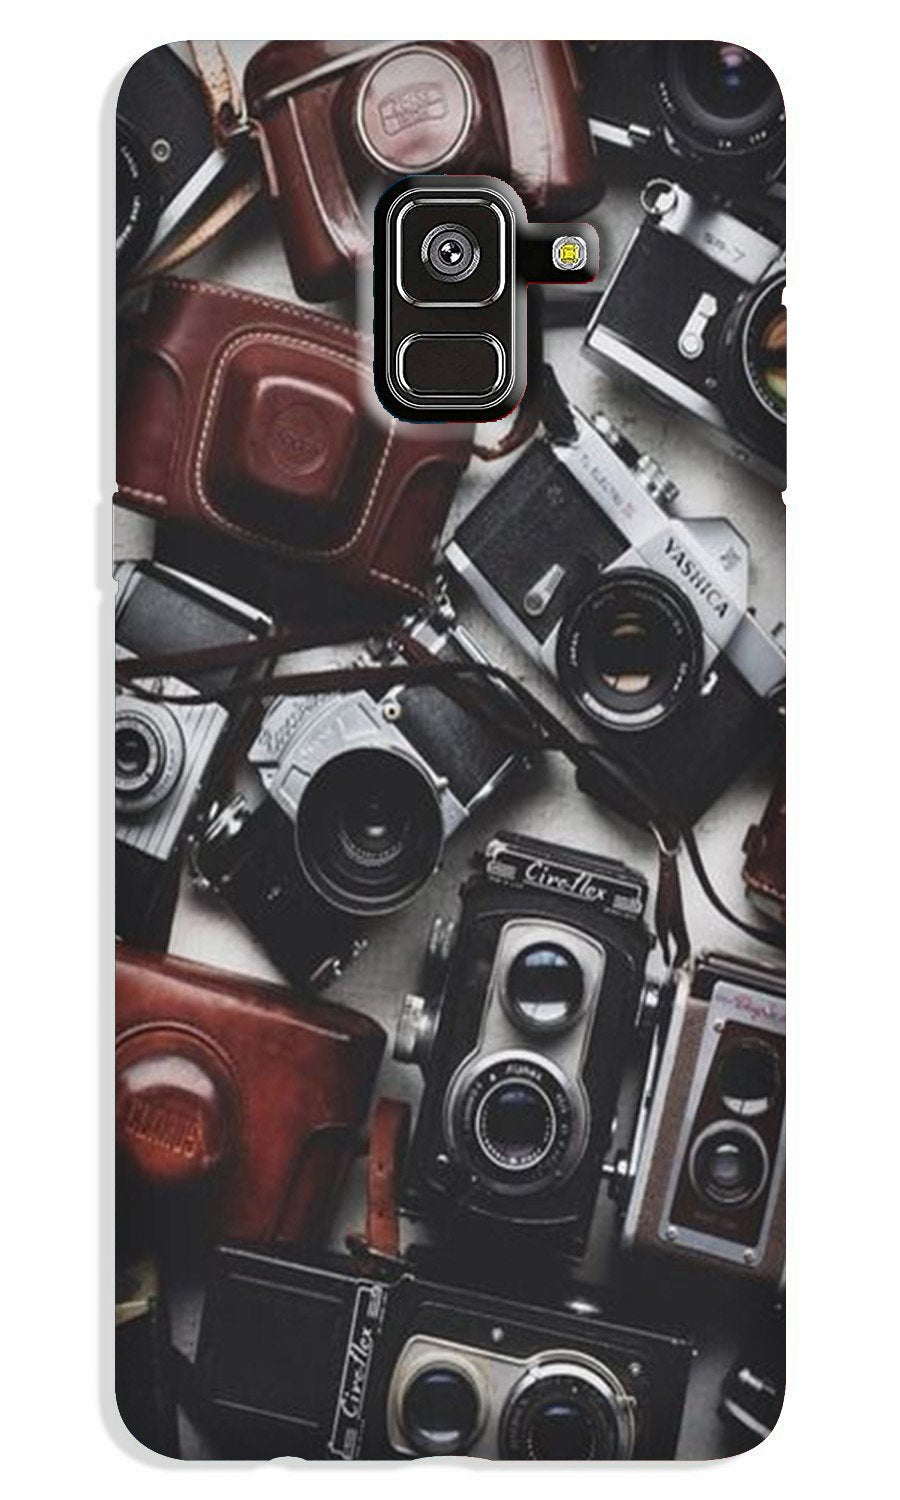 Cameras Case for Galaxy A8 Plus